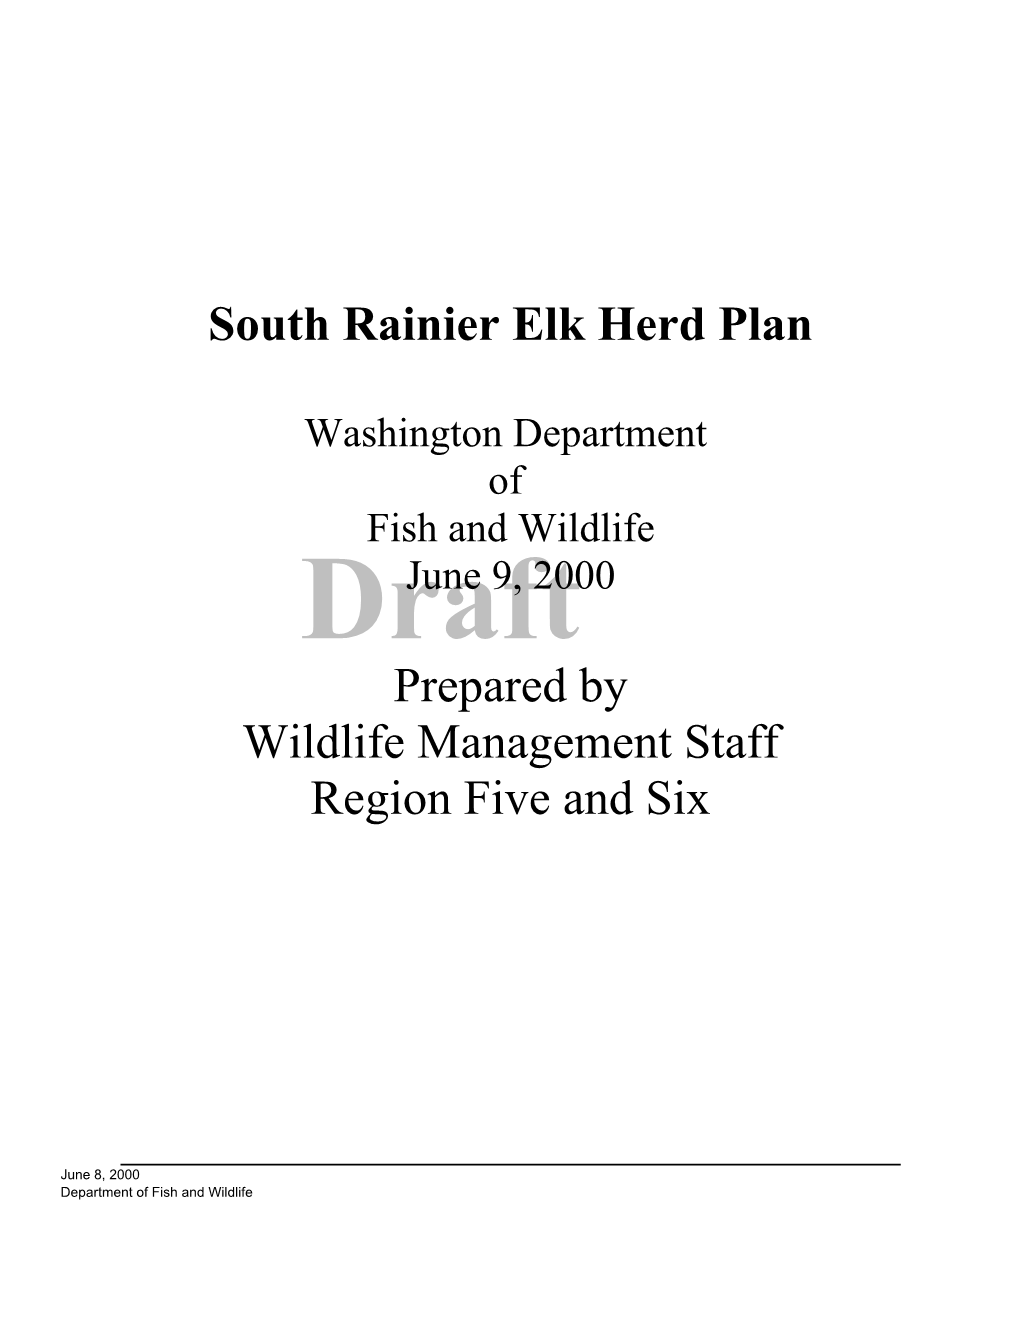 WDFW Draft South Rainier Elk Herd Plan